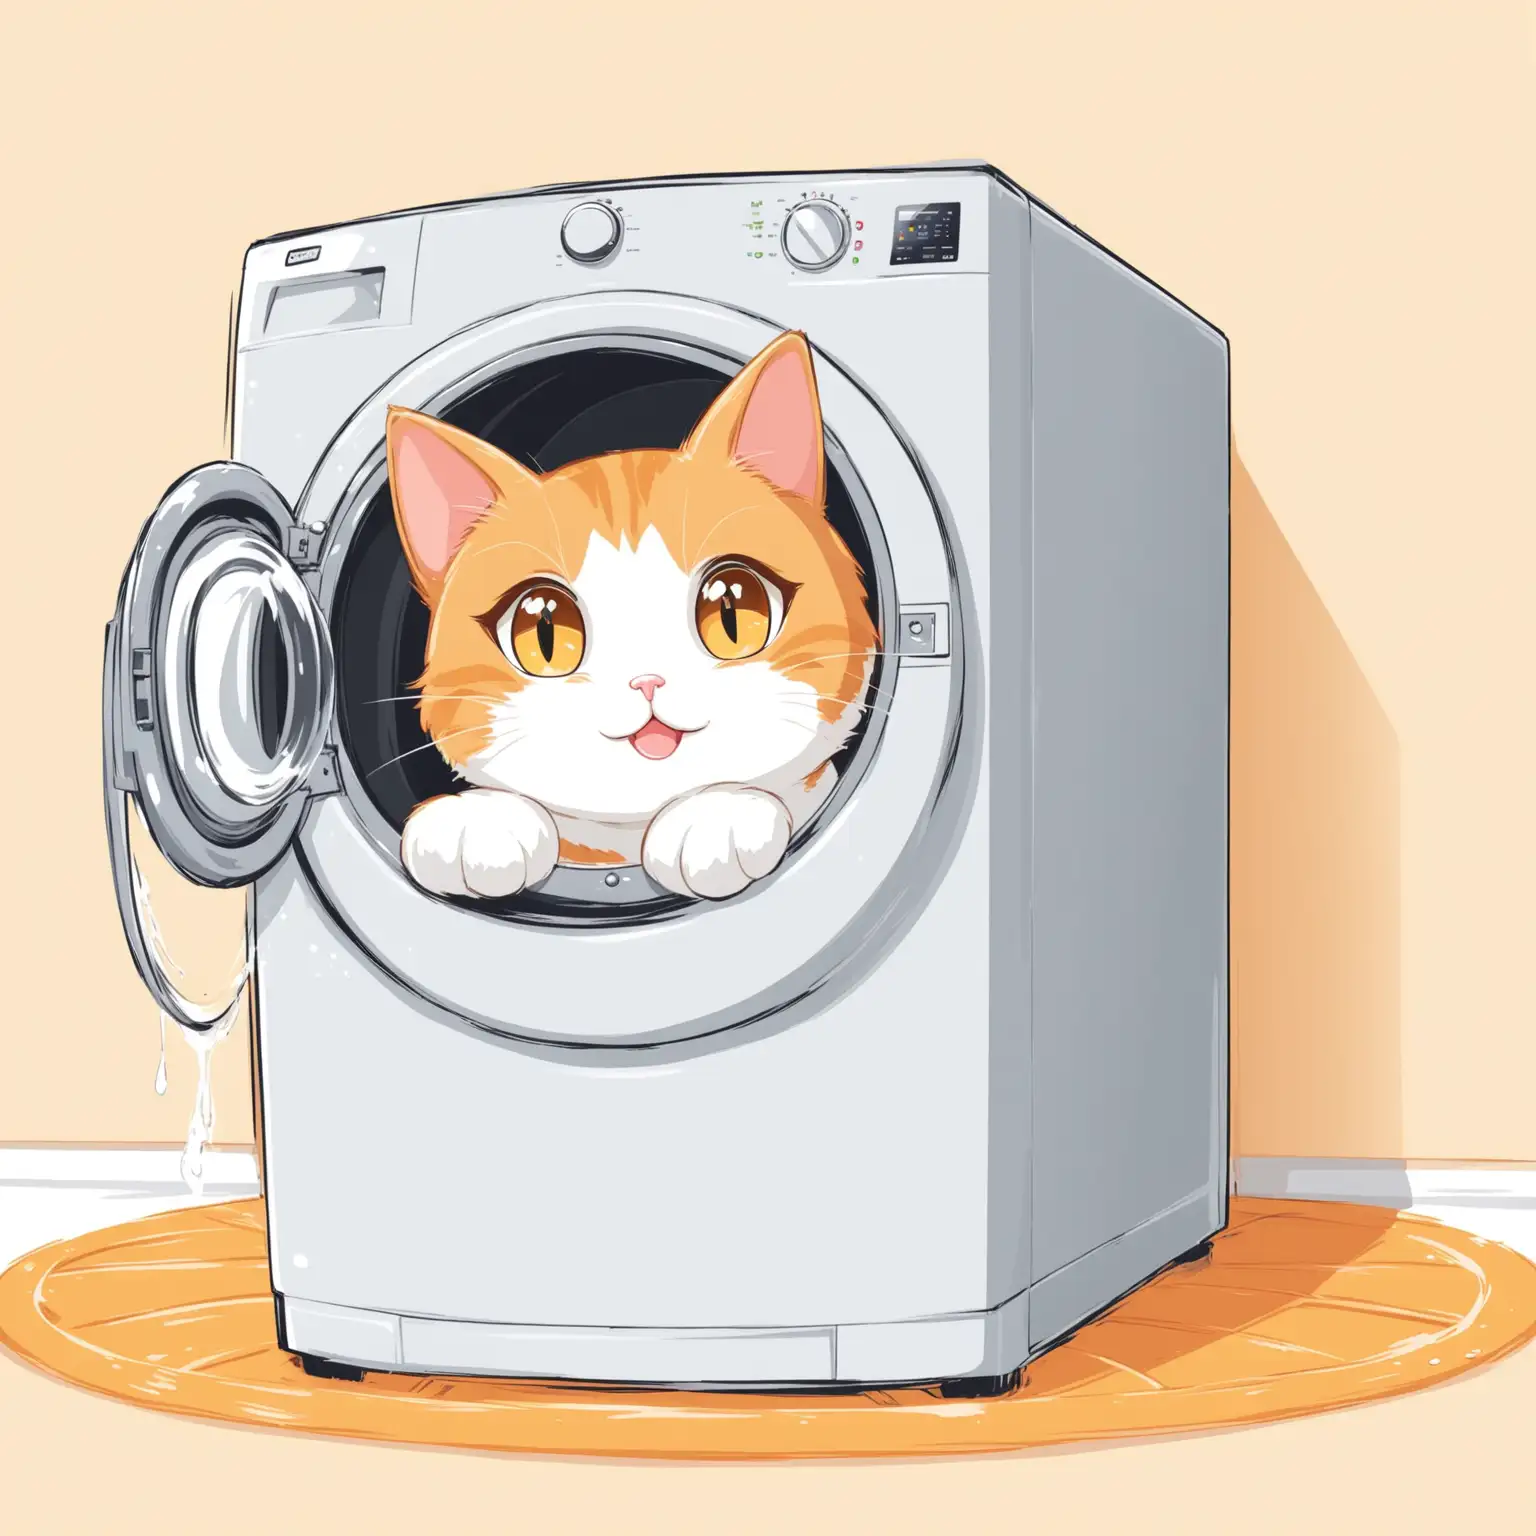 Playful Cat in Washing Machine Cartoon Illustration on White Background